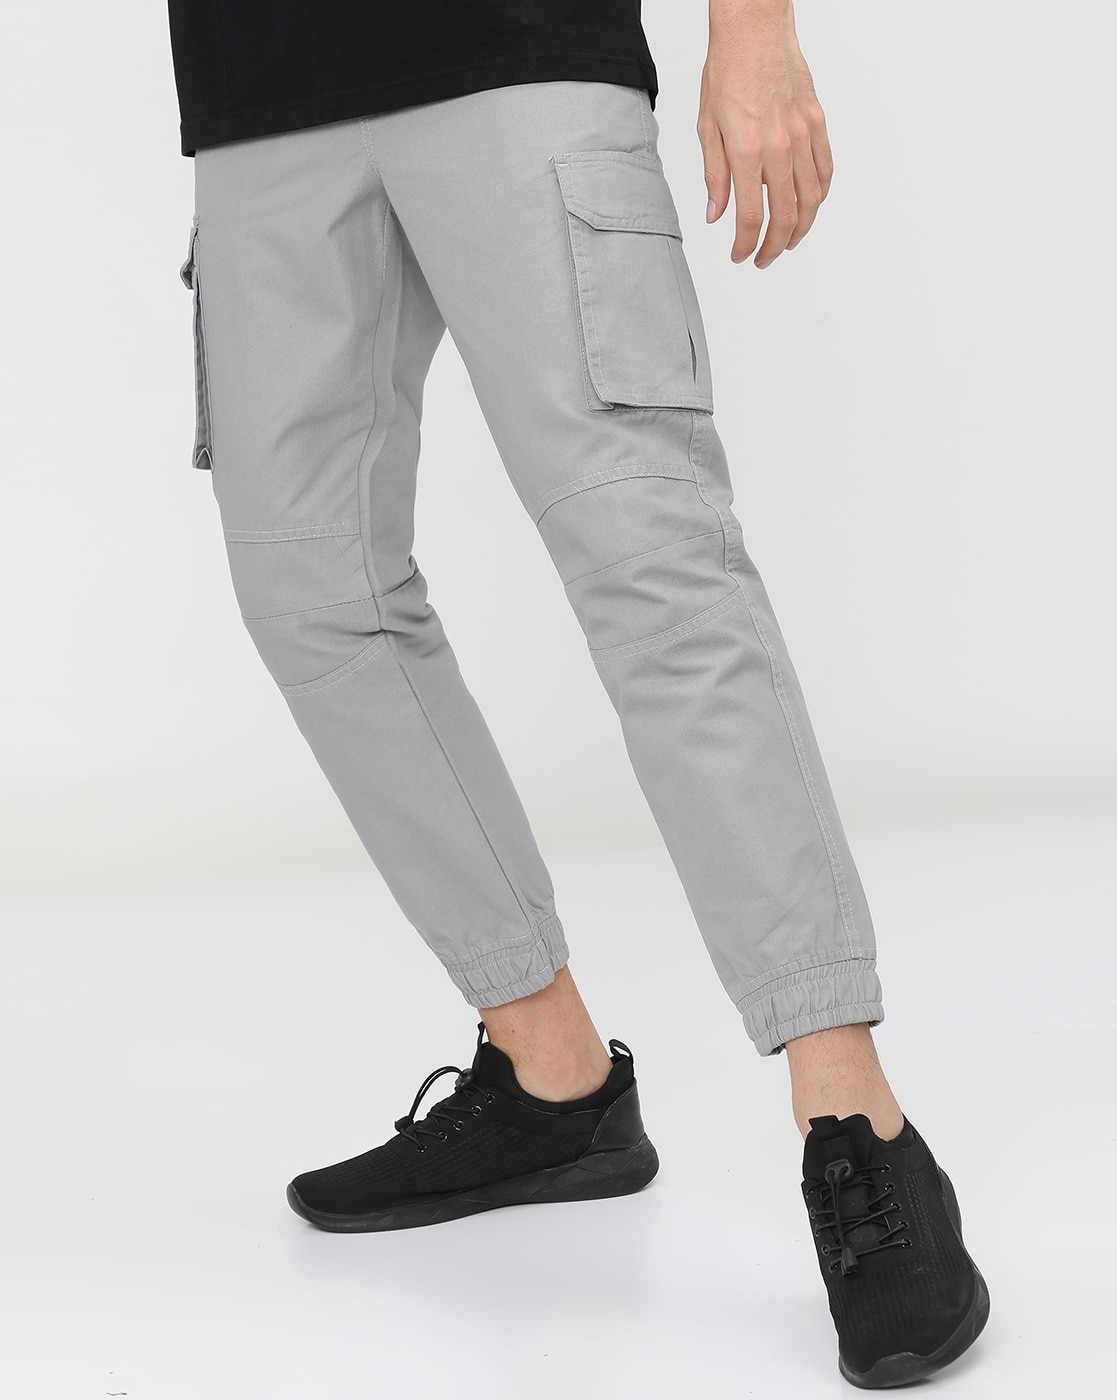 Buy Green Trousers  Pants for Men by TBase Online  Ajiocom